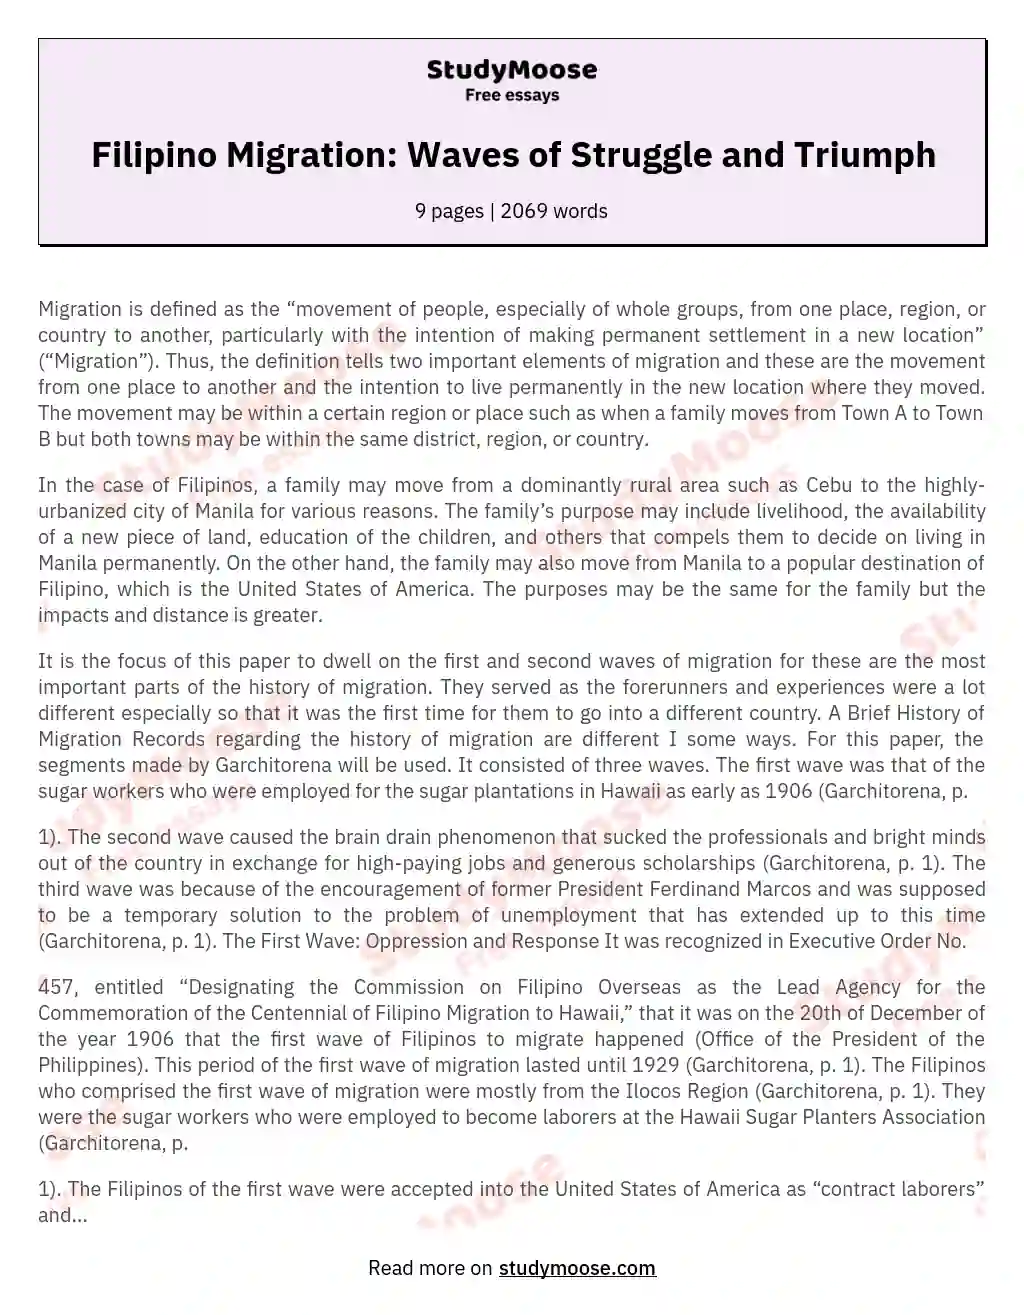 Filipino Migration: Waves of Struggle and Triumph essay